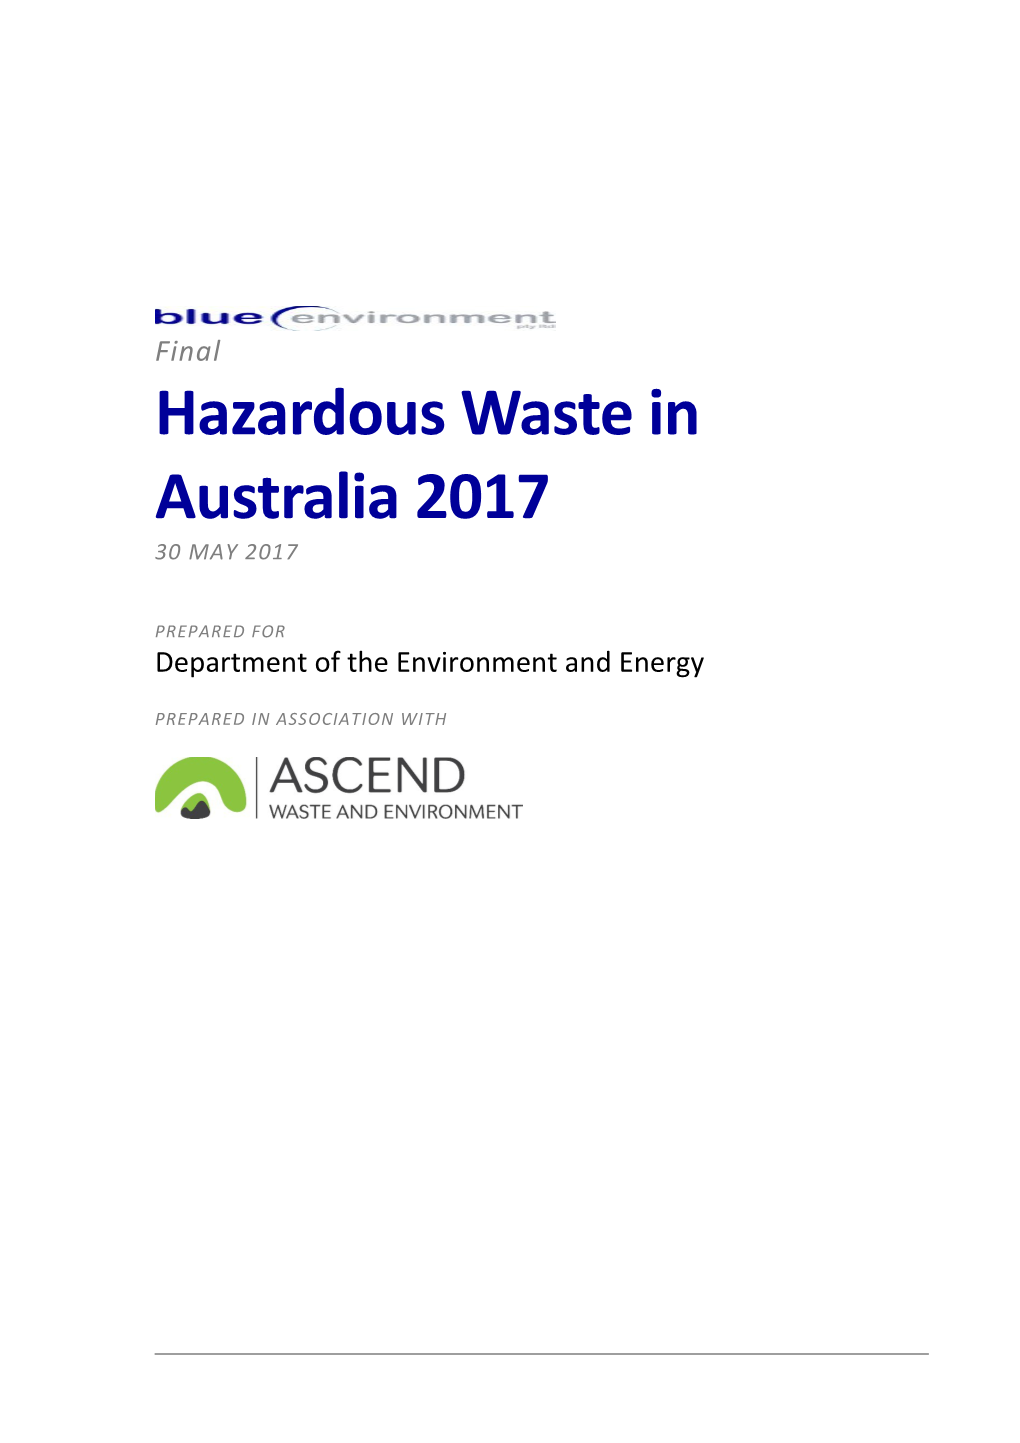 Hazardous Waste in Australia 2017